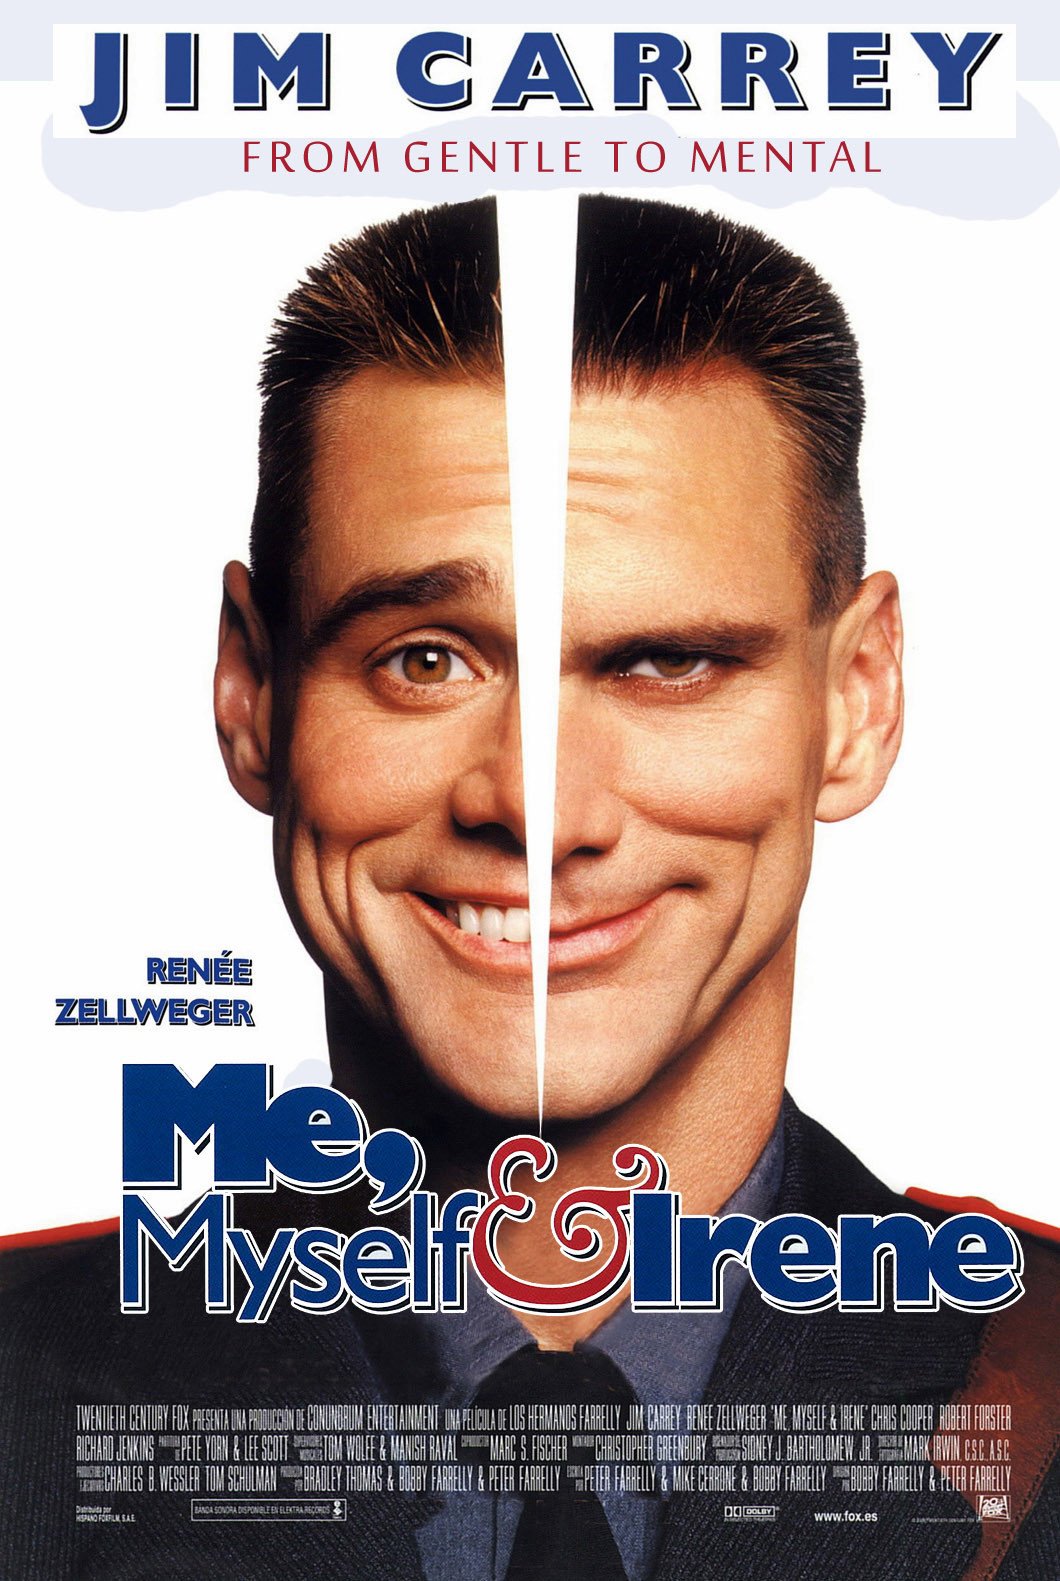 L'affiche du film Me, Myself and Irene